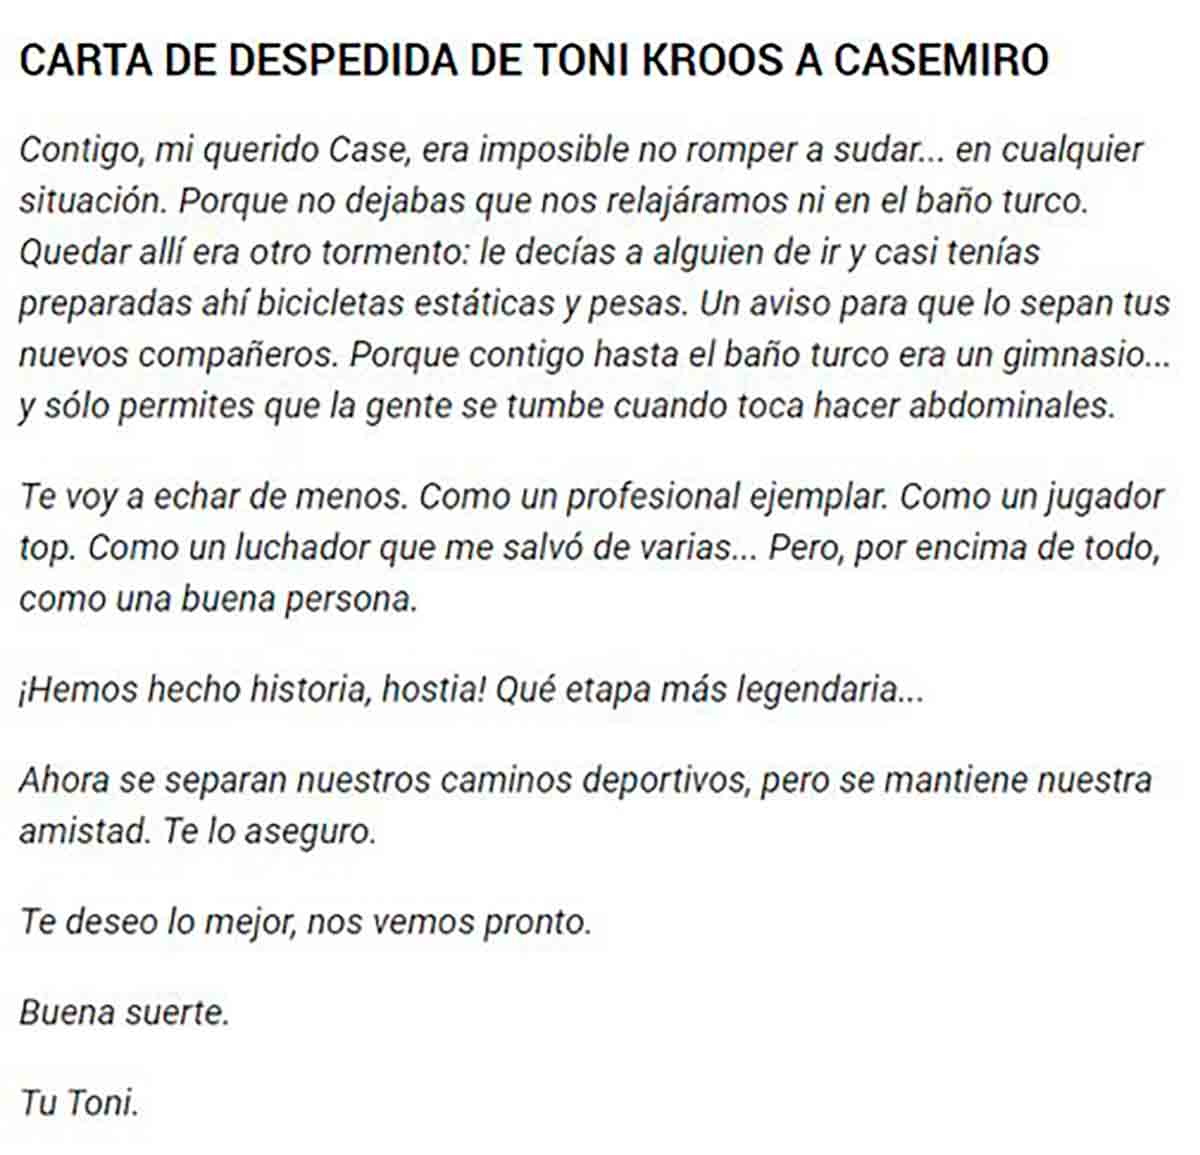 Carta despedida Kroos a Casemiro